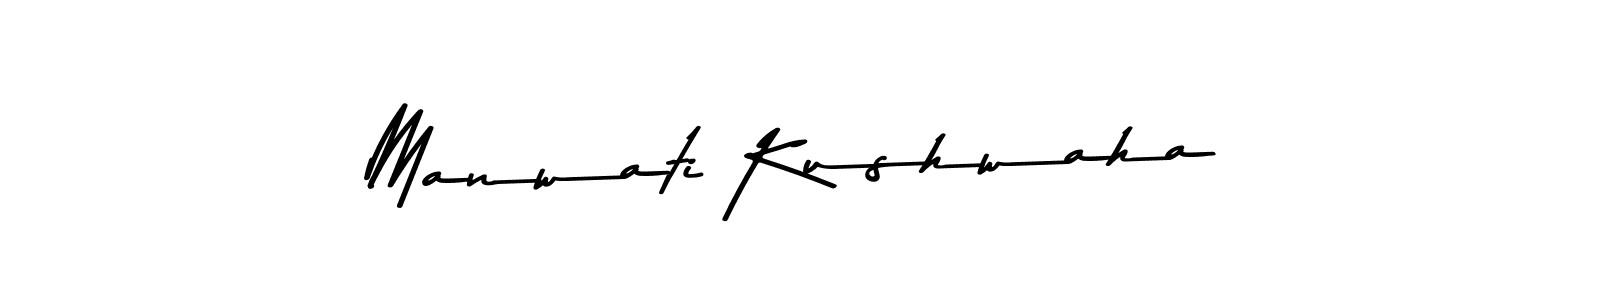 How to Draw Manwati Kushwaha signature style? Asem Kandis PERSONAL USE is a latest design signature styles for name Manwati Kushwaha. Manwati Kushwaha signature style 9 images and pictures png